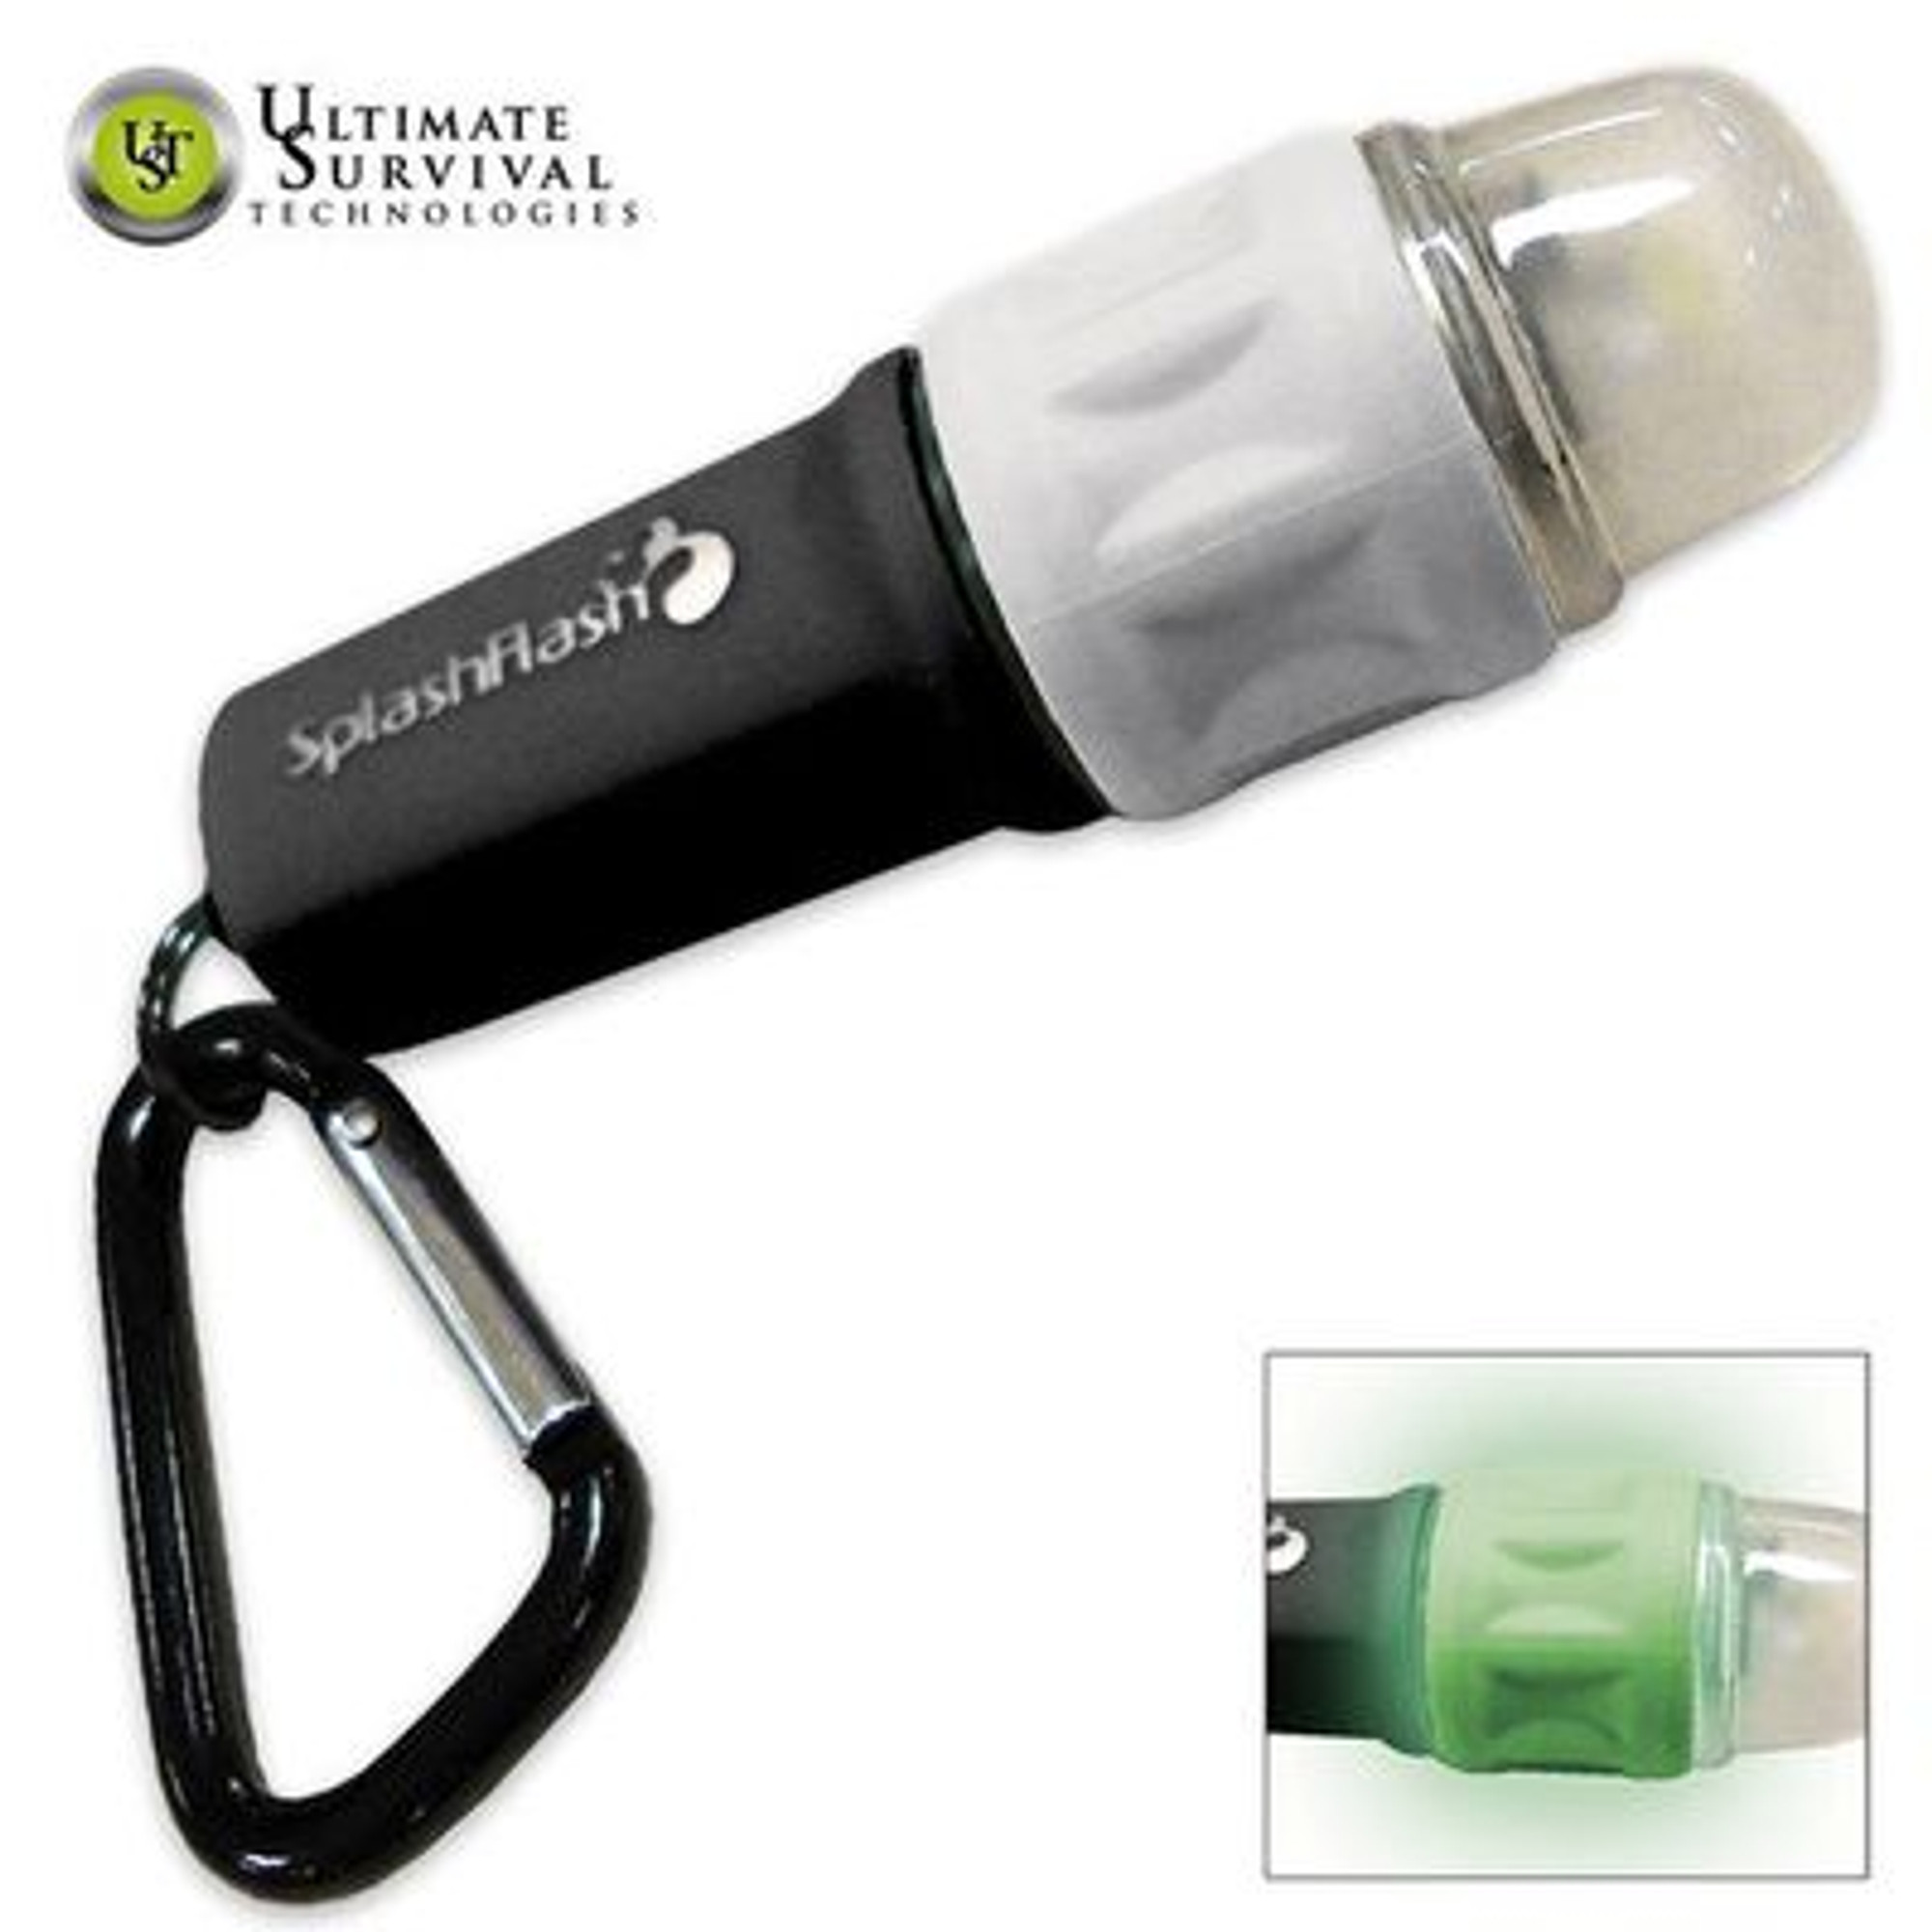 SplashFlash Glo Waterfproof LED Flashlight w/Carabiner